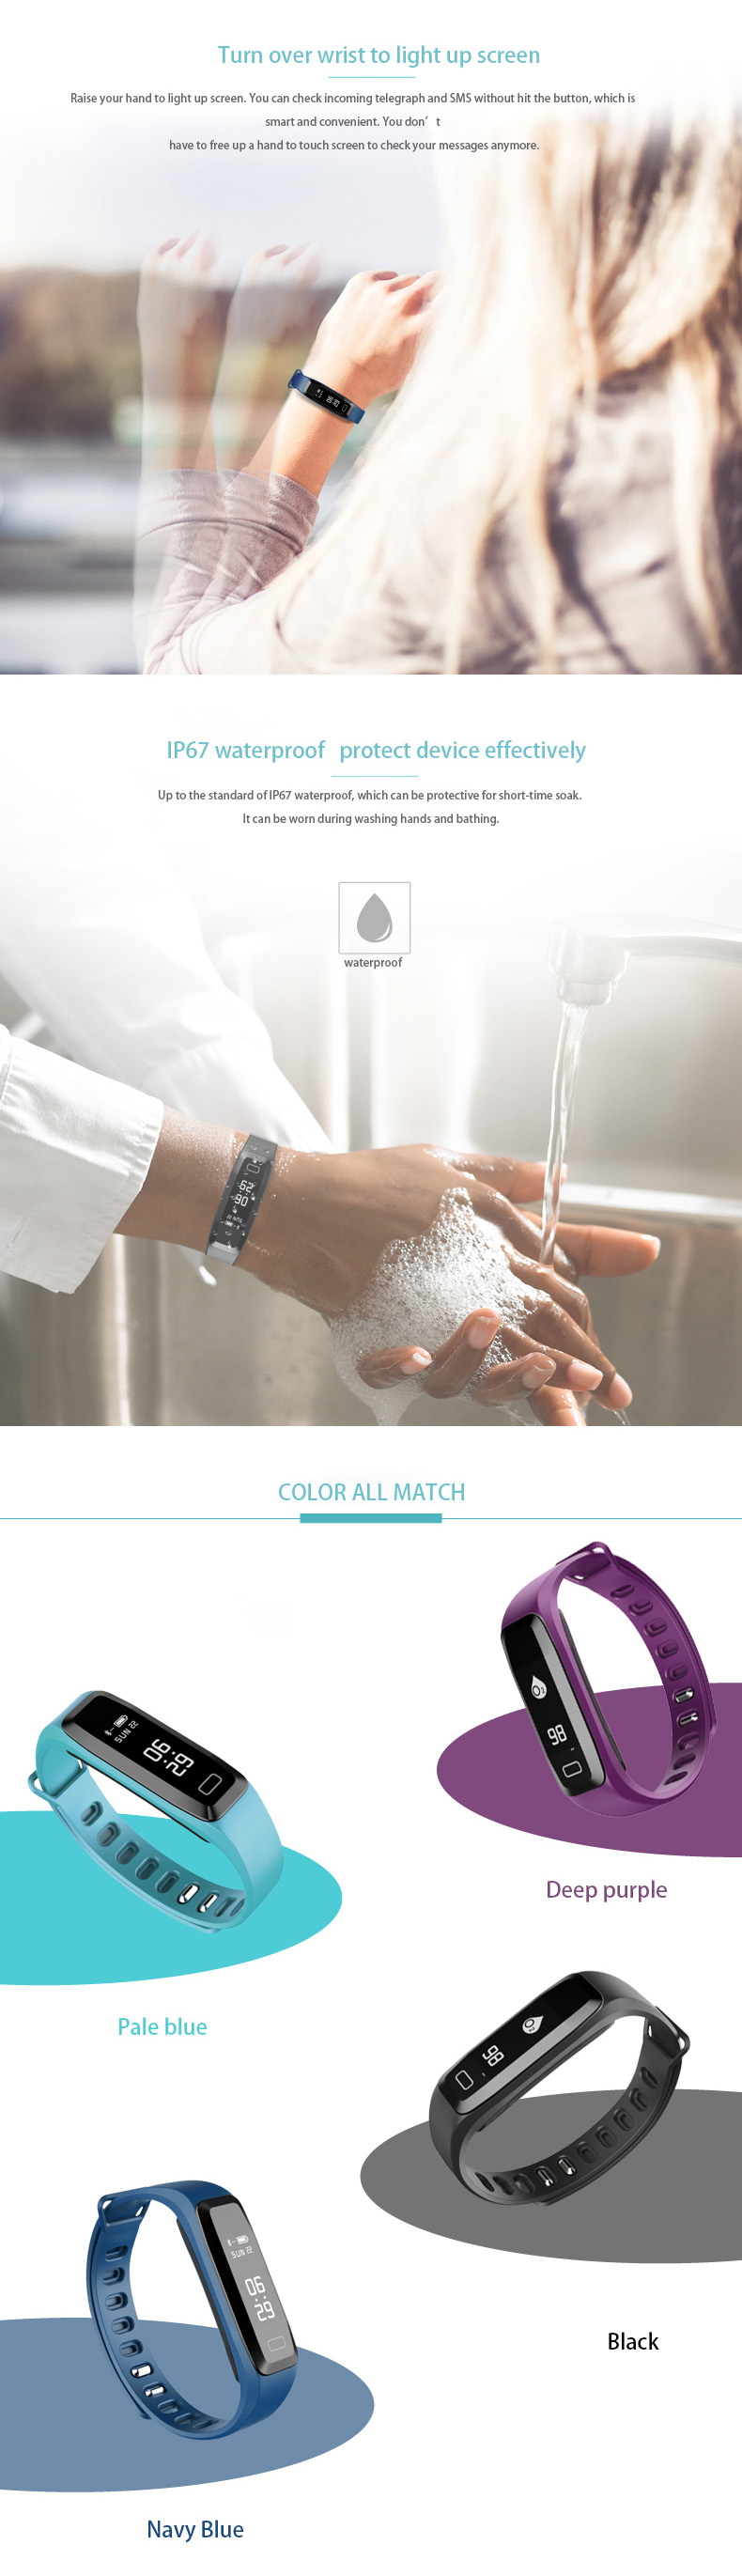 G15 Bluetooth 4.0 Smart Bracelet Heart Rate Monitor Blood Pressure Wristband Pedometer Activities Fitness Tracker